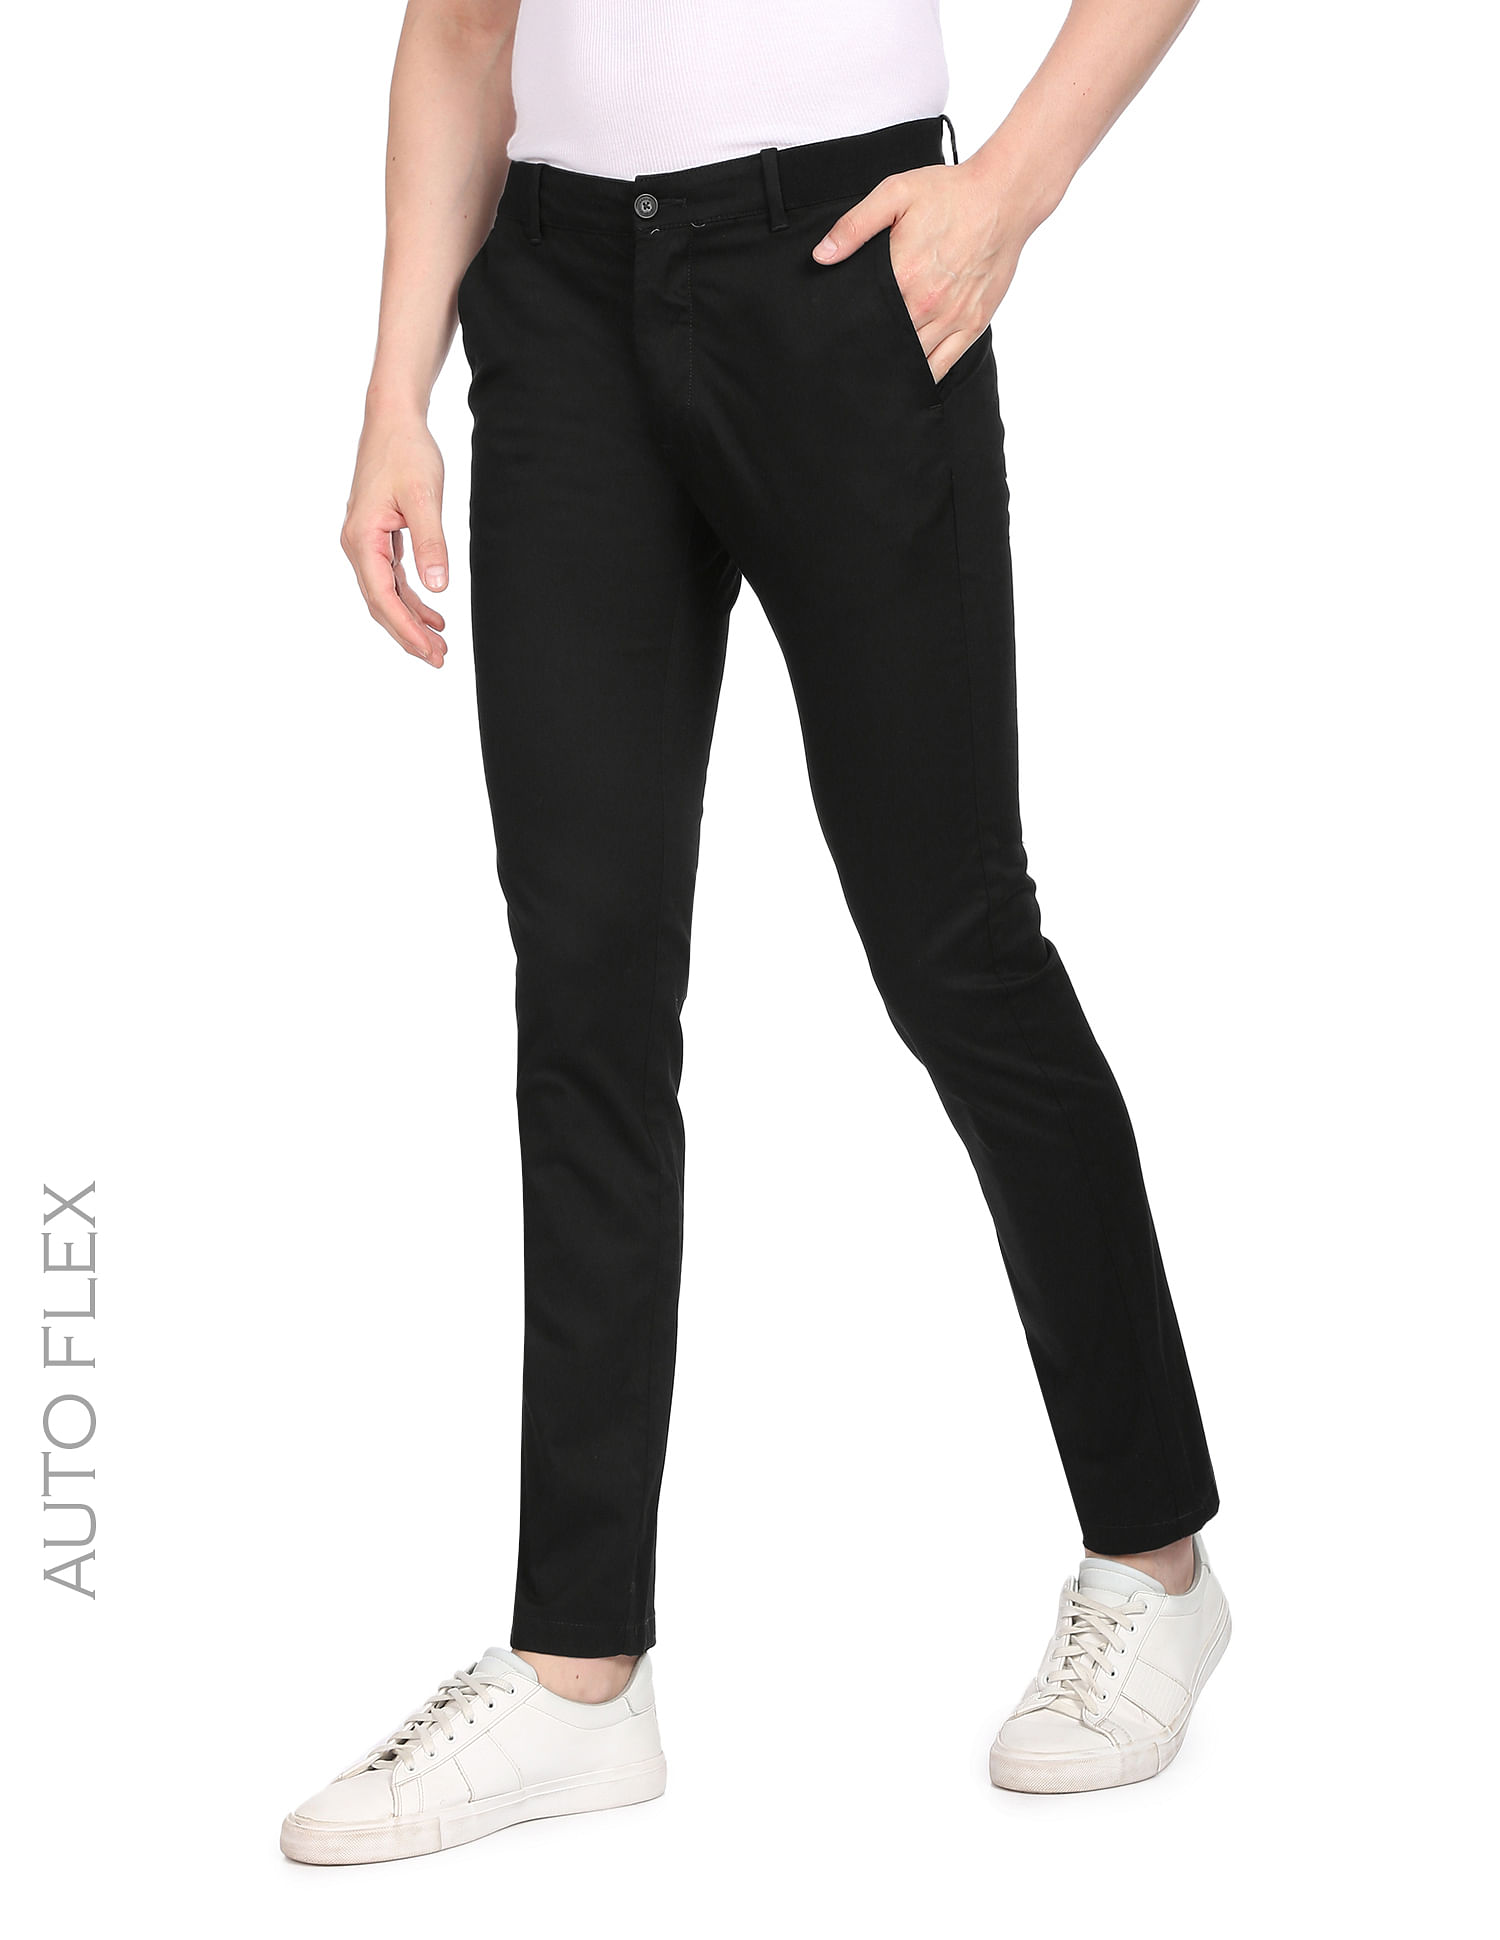 Buy Black Jeans for Men by LEVIS Online | Ajio.com